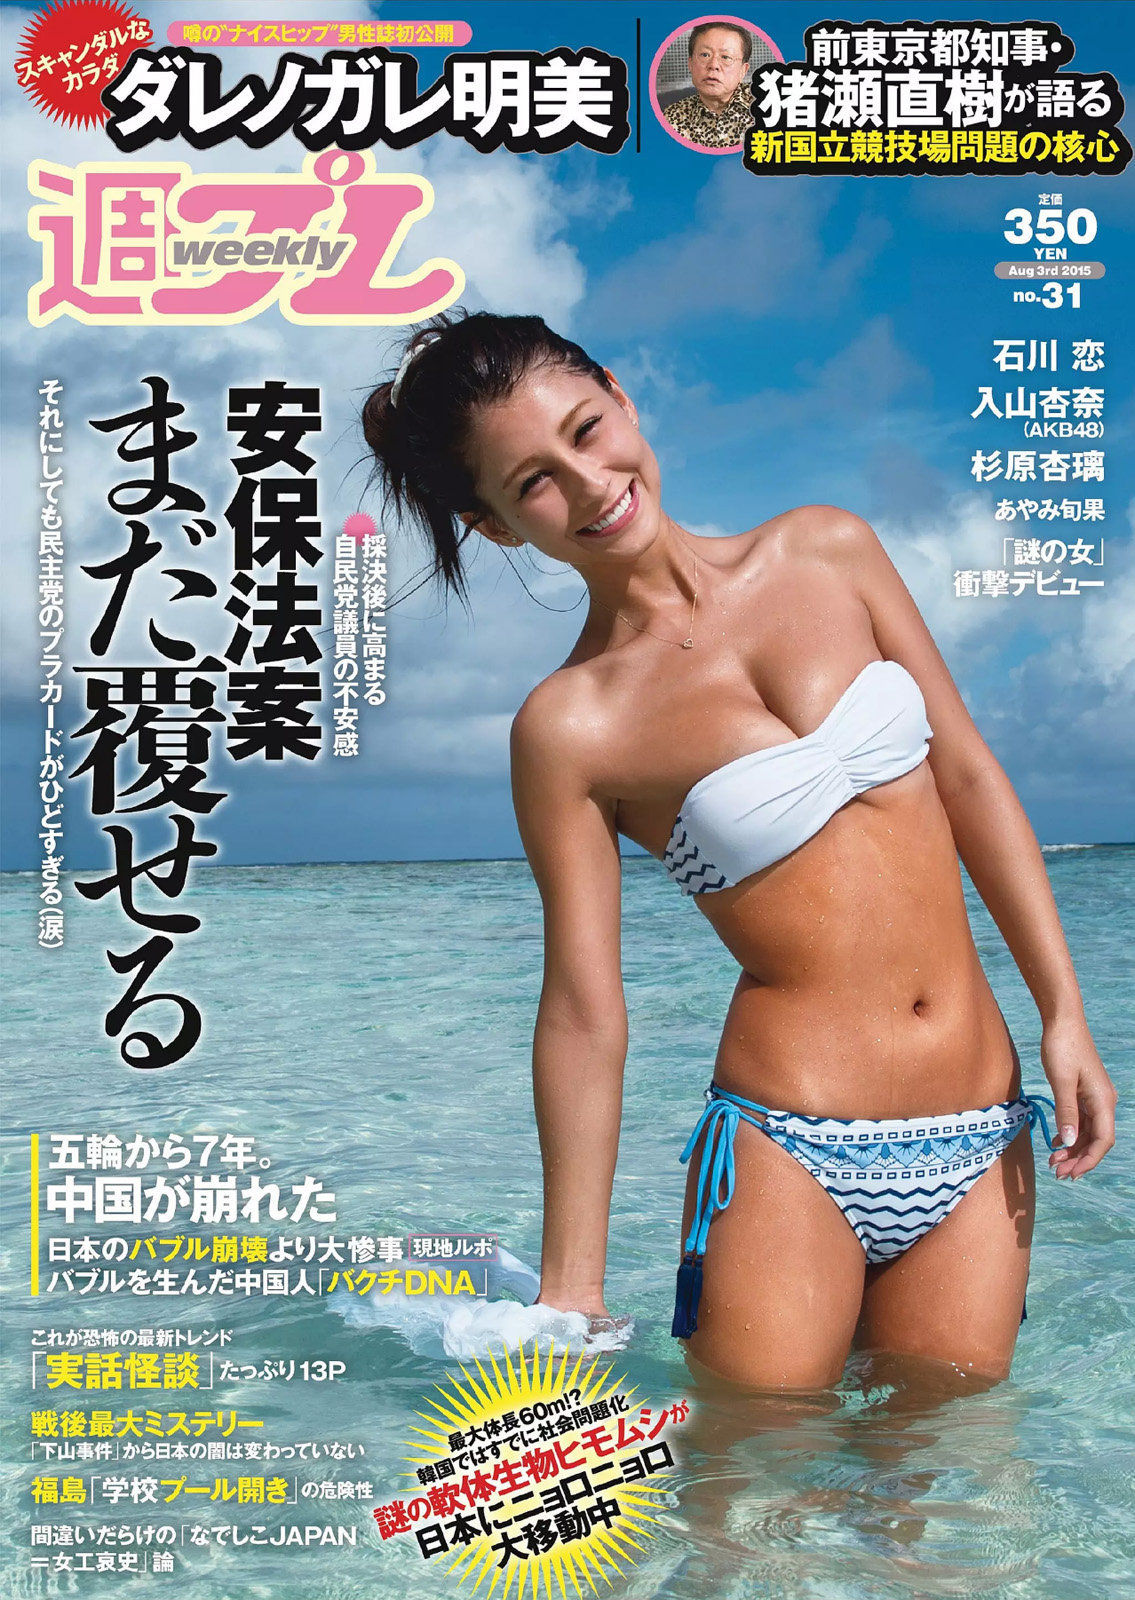 princejunleo:  Still one of my favorite Japanese model and talents, Akemi Darenogare